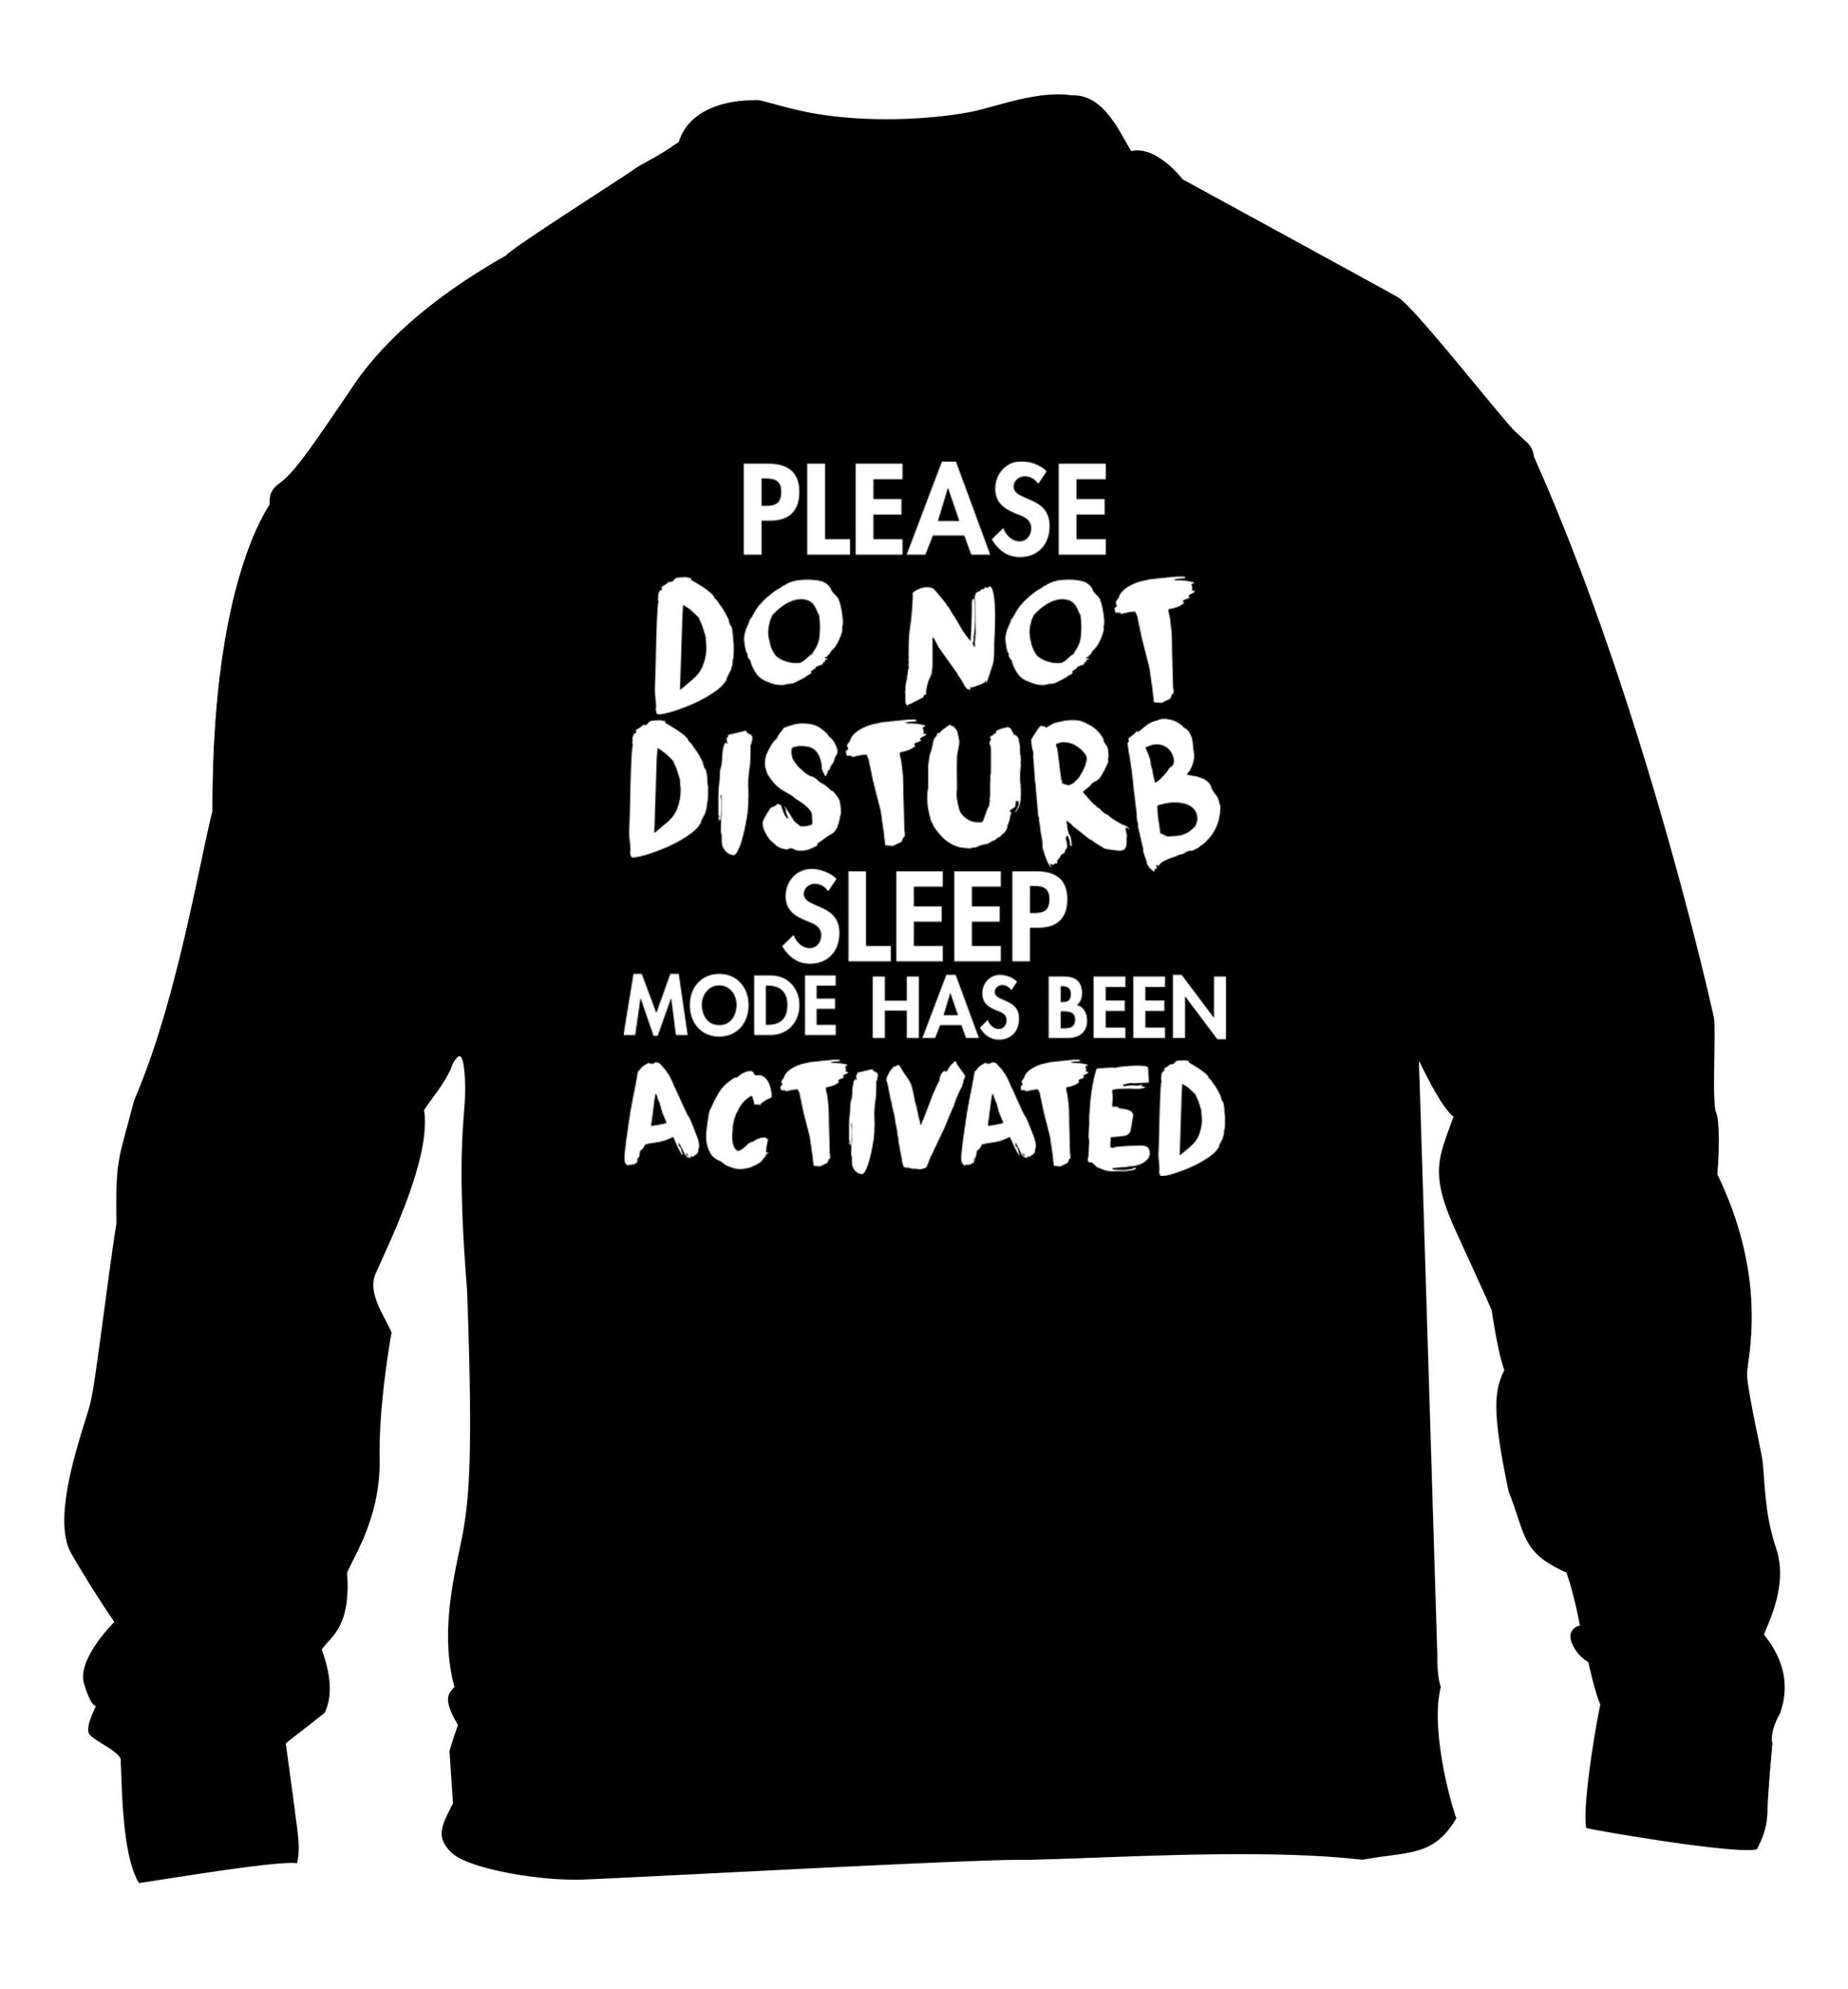 Please do not disturb sleeping mode has been activated children's black sweater 12-14 Years